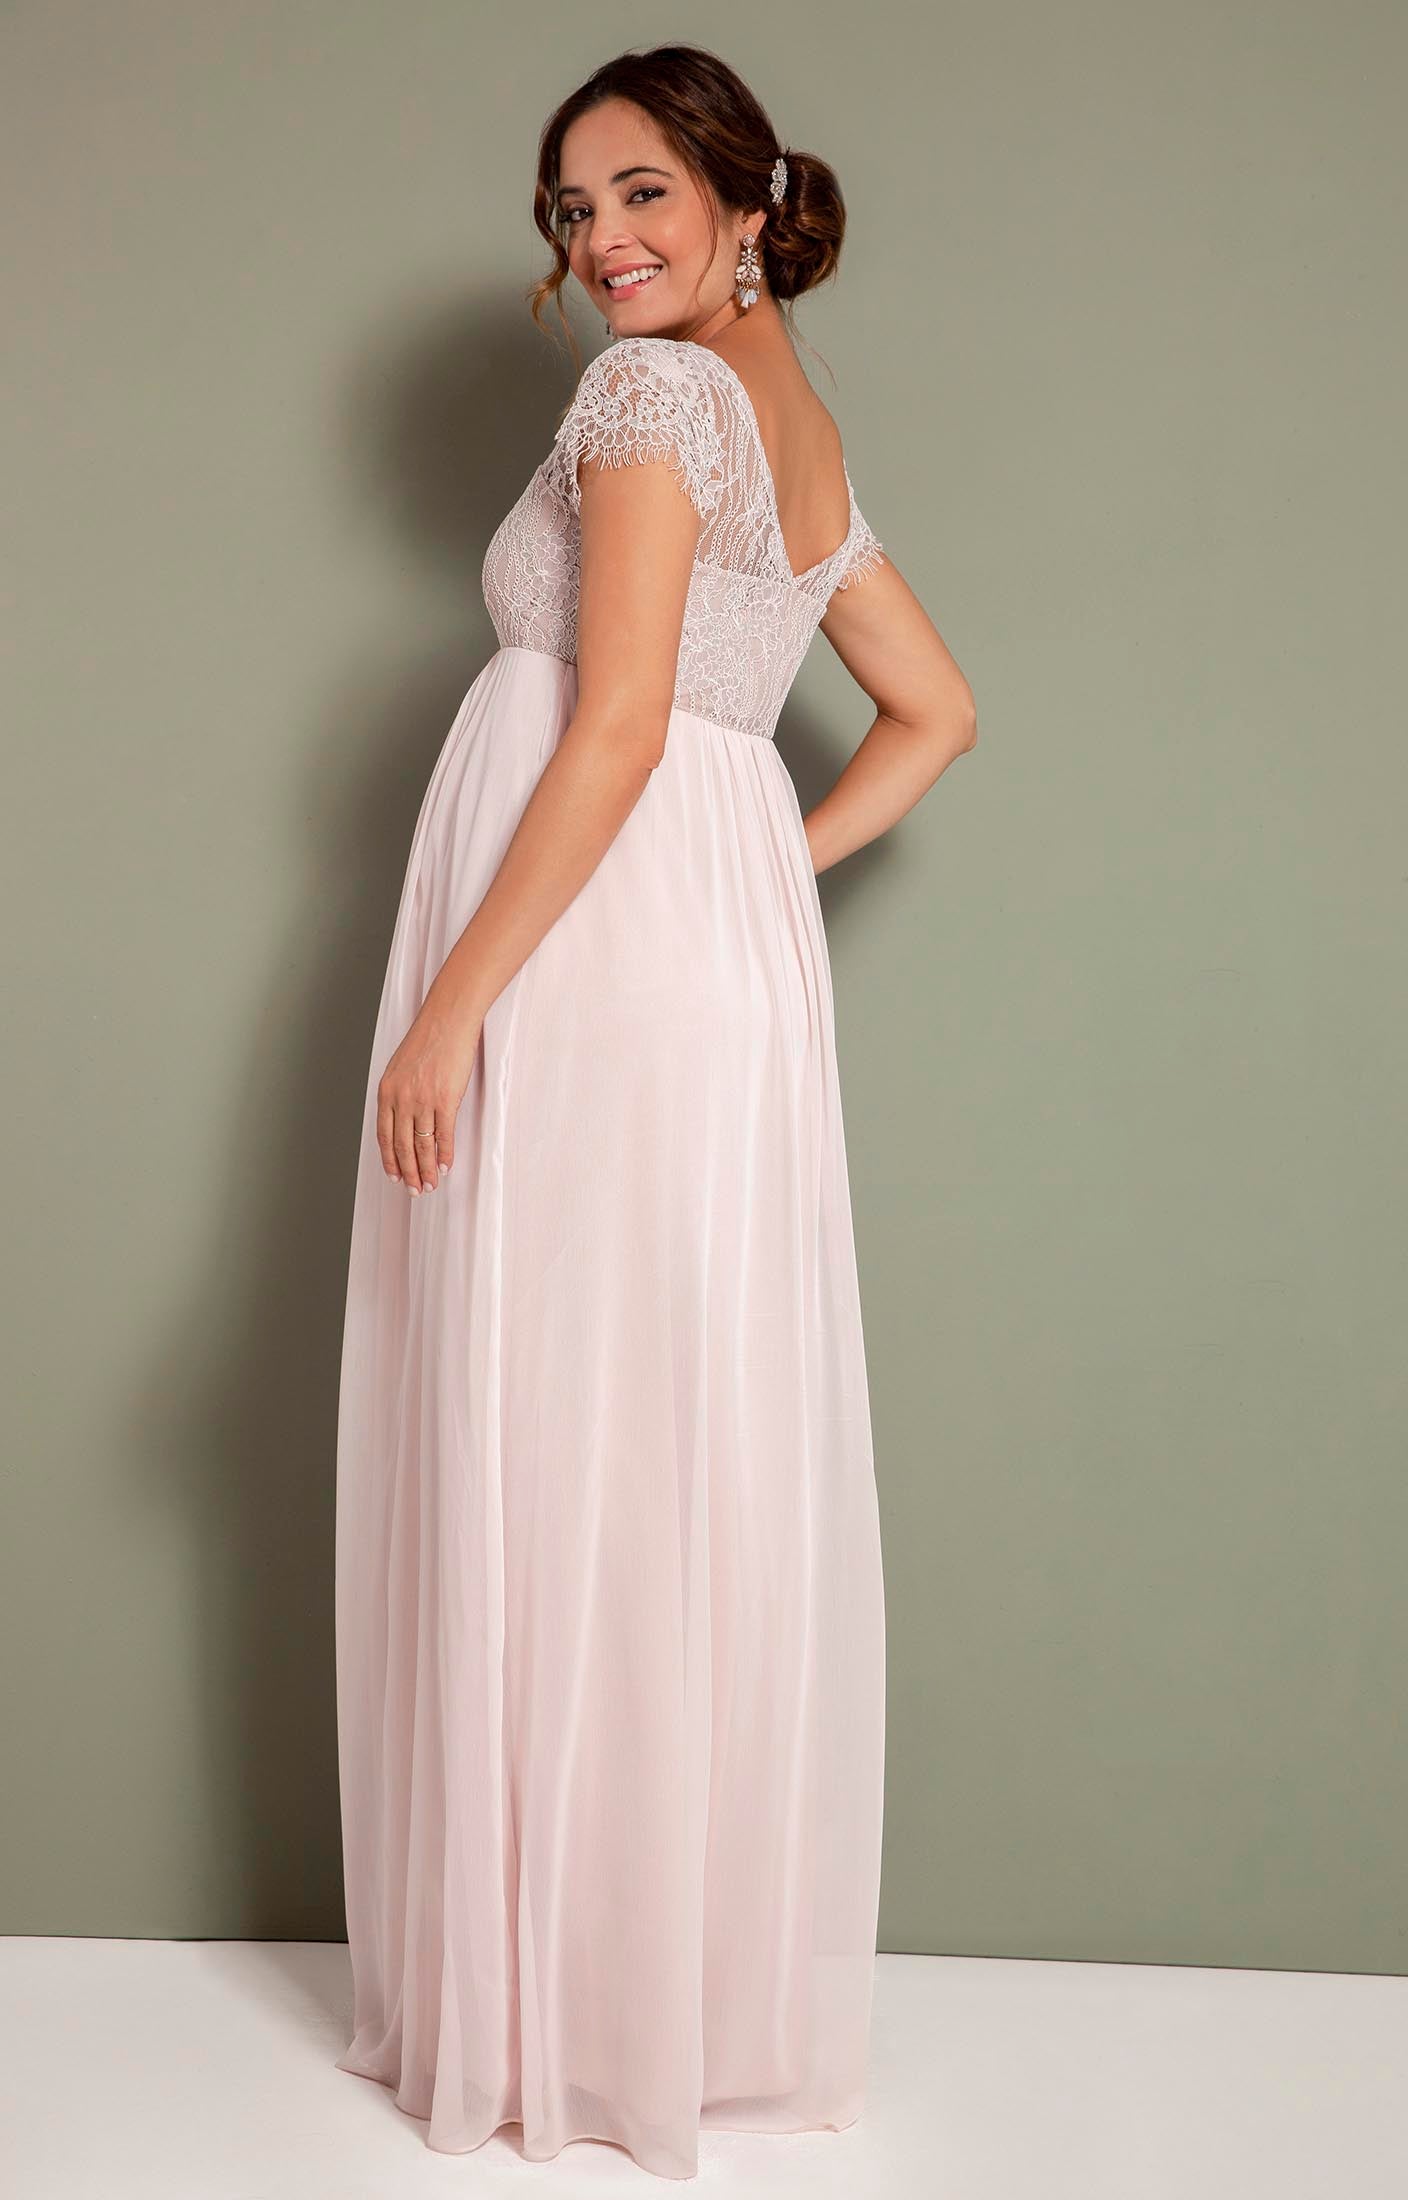 Tiffany Rose Maternity Gown Elizabeth Soft Mist Pink